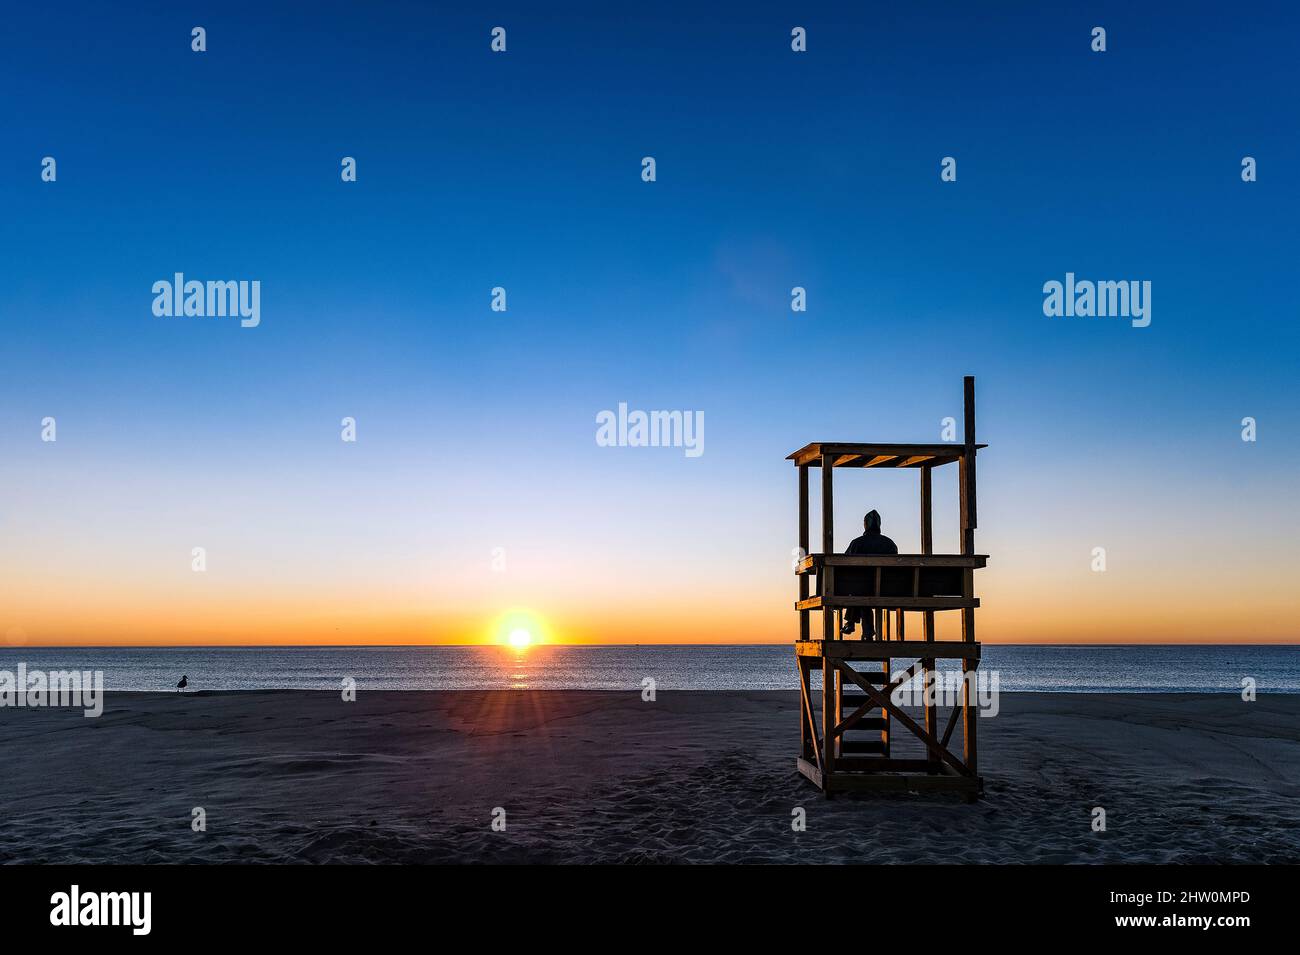 Una persona solitaria observa el amanecer en el océano, Cape Cod National Seashore, Orleans, Cape Cod, Massachusetts, Estados Unidos. Foto de stock